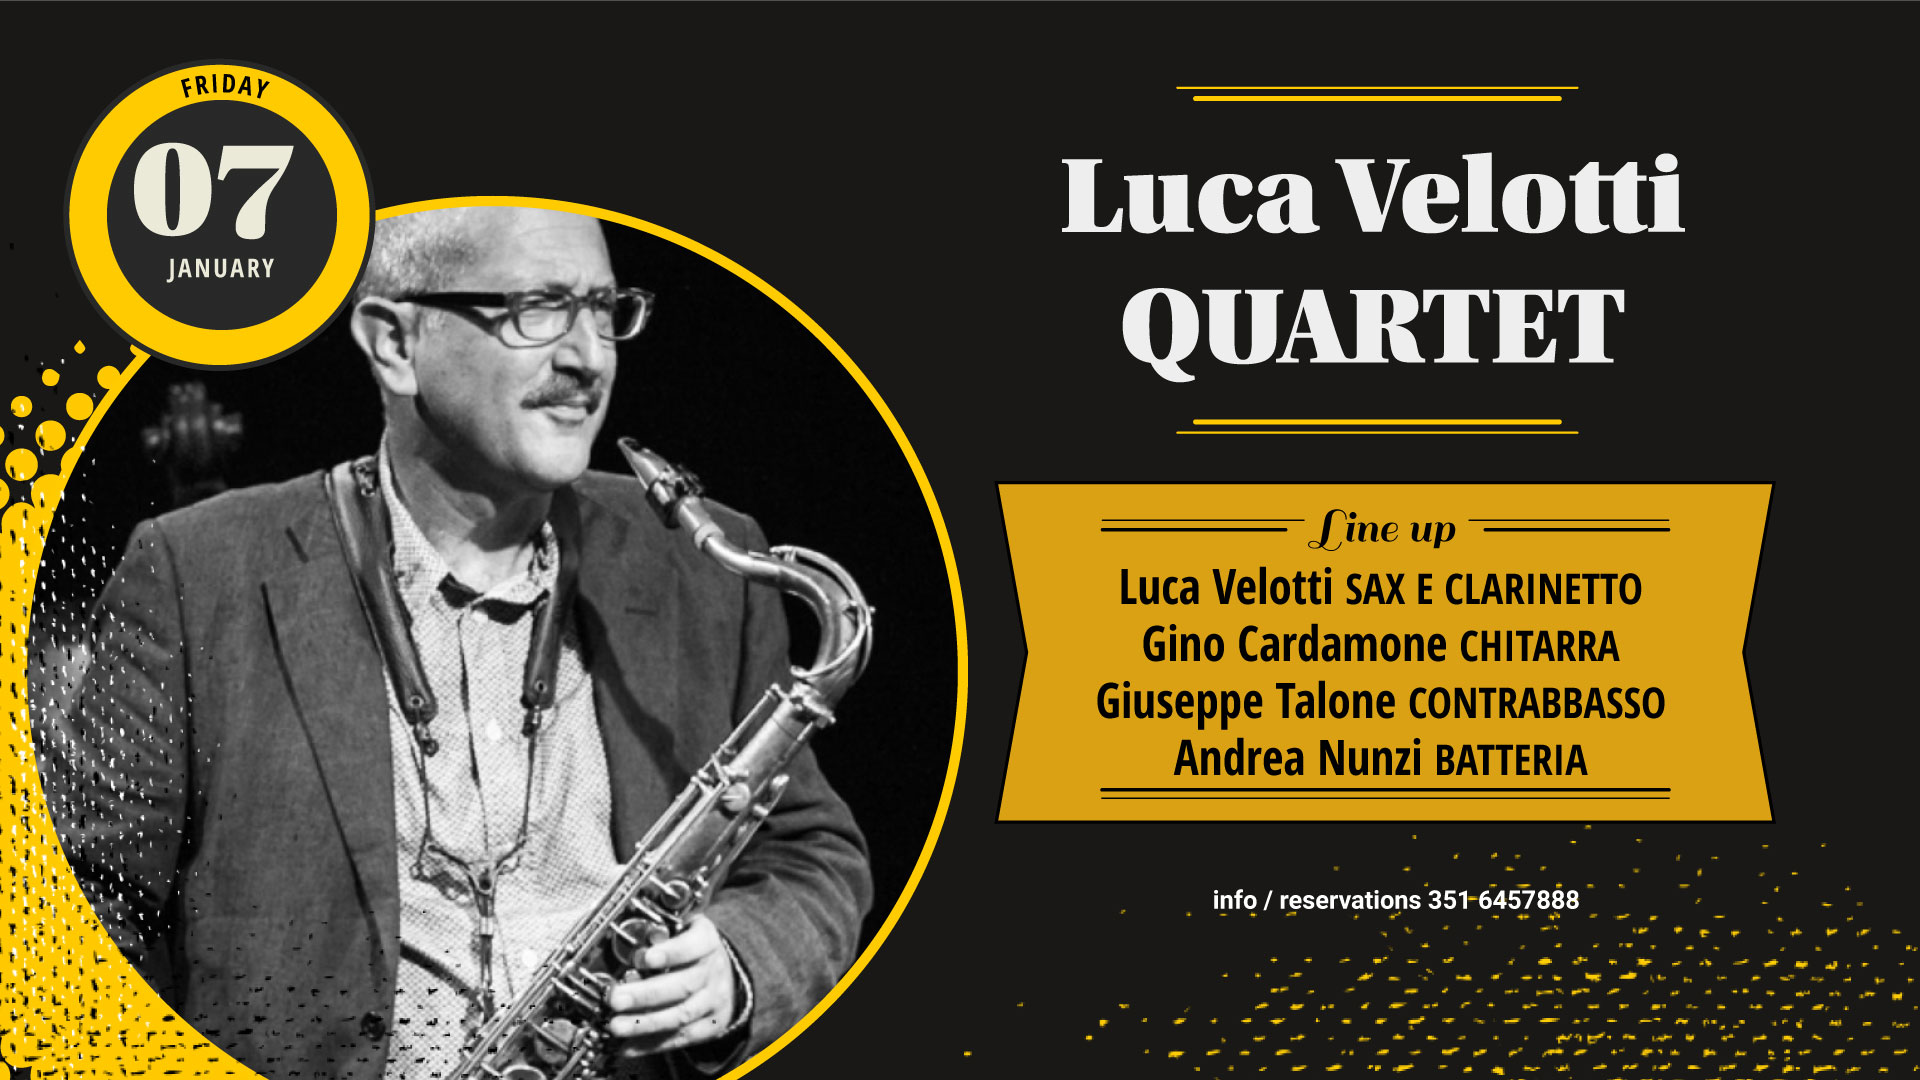 Luca Velotti Quartet – Gregory's Jazz Club